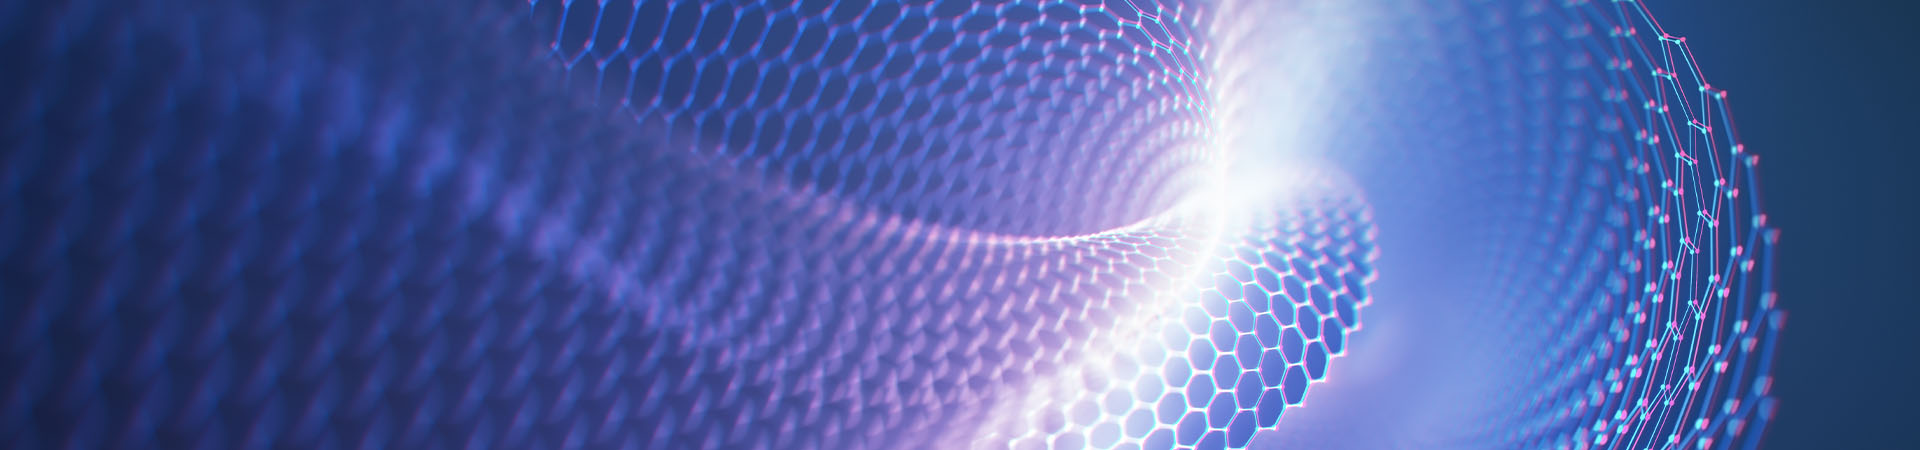 Stylized purple and blue honeycomb geometric pattern representing geometric deep learning.